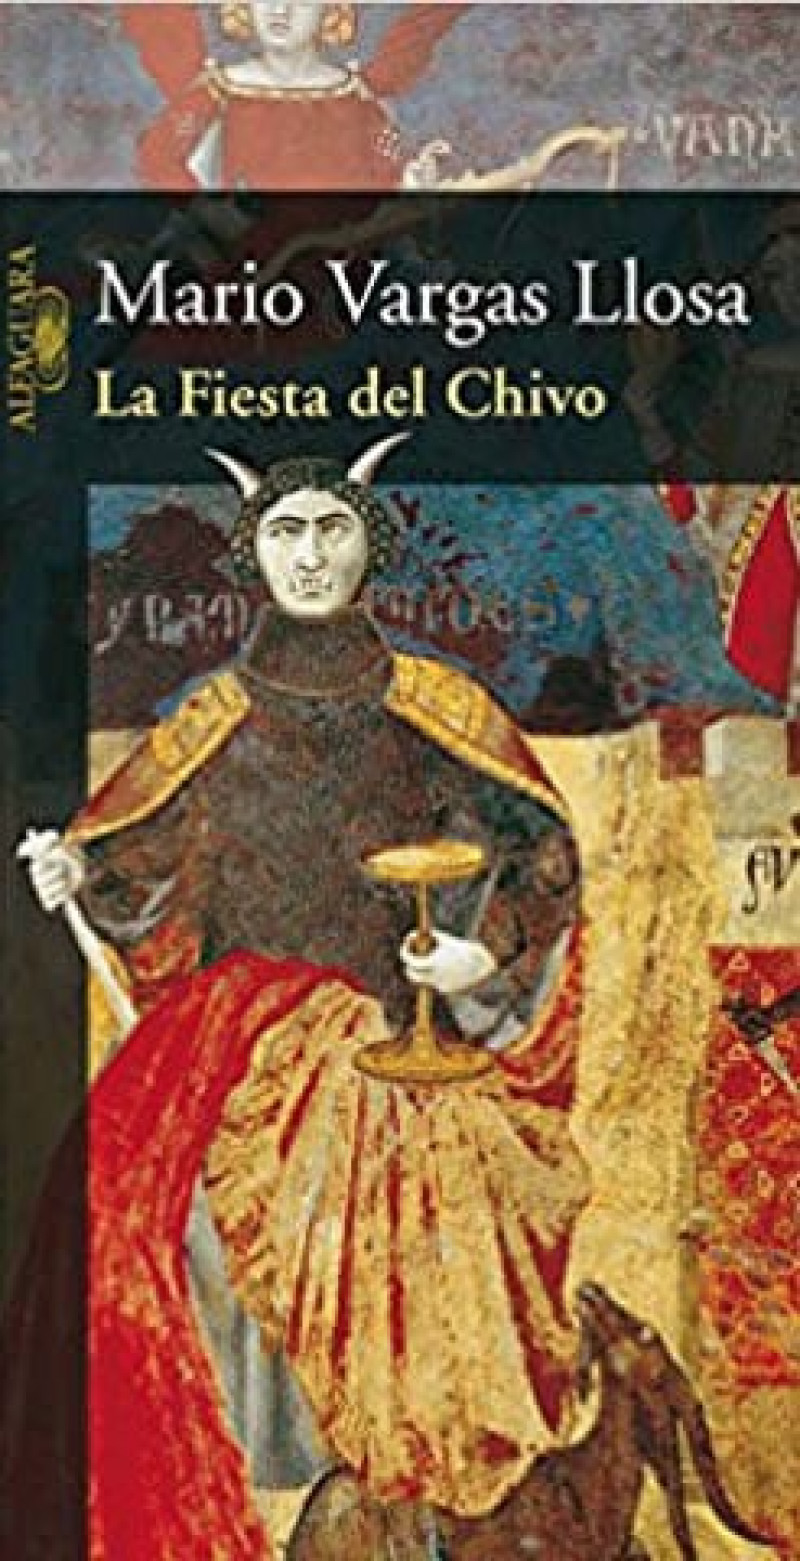 La novela La iesta del Chivo.